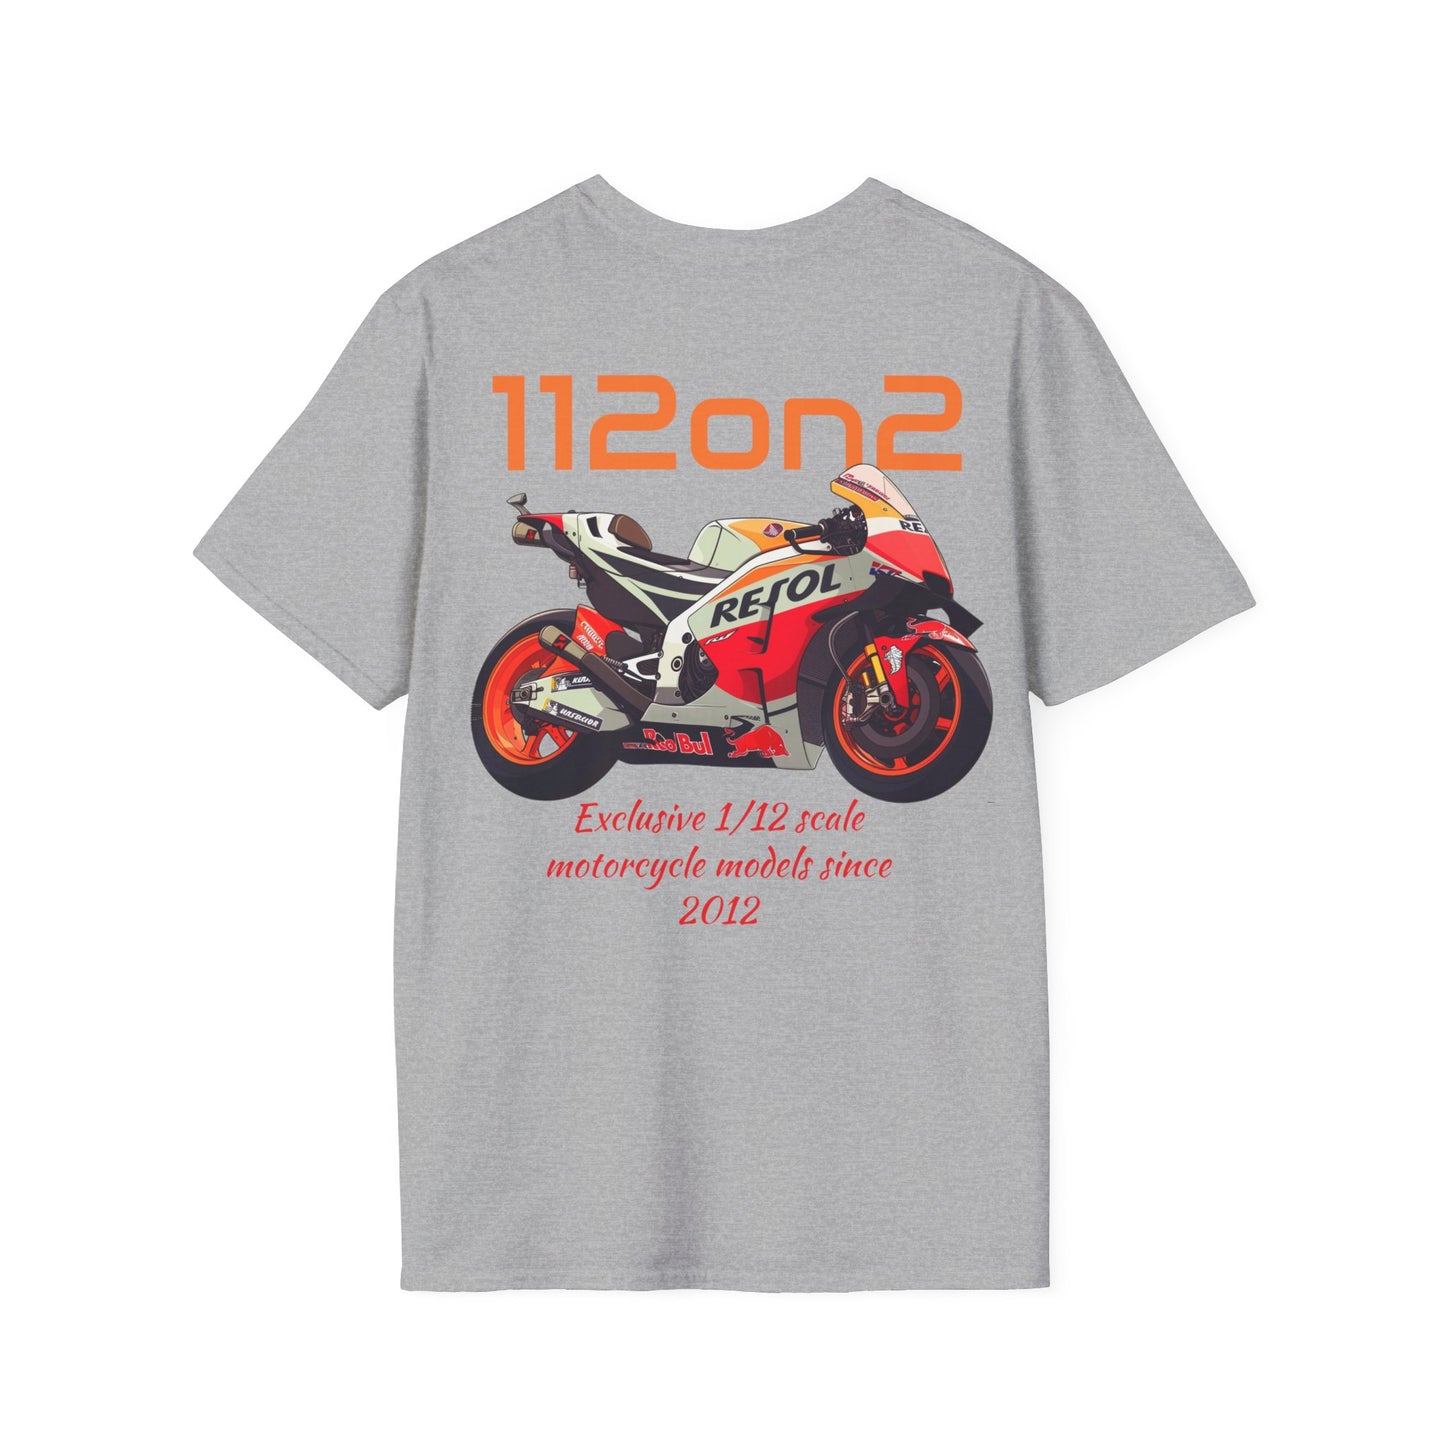 112on2 T-Shirt Cartoon Racing Motorcycle Model V2